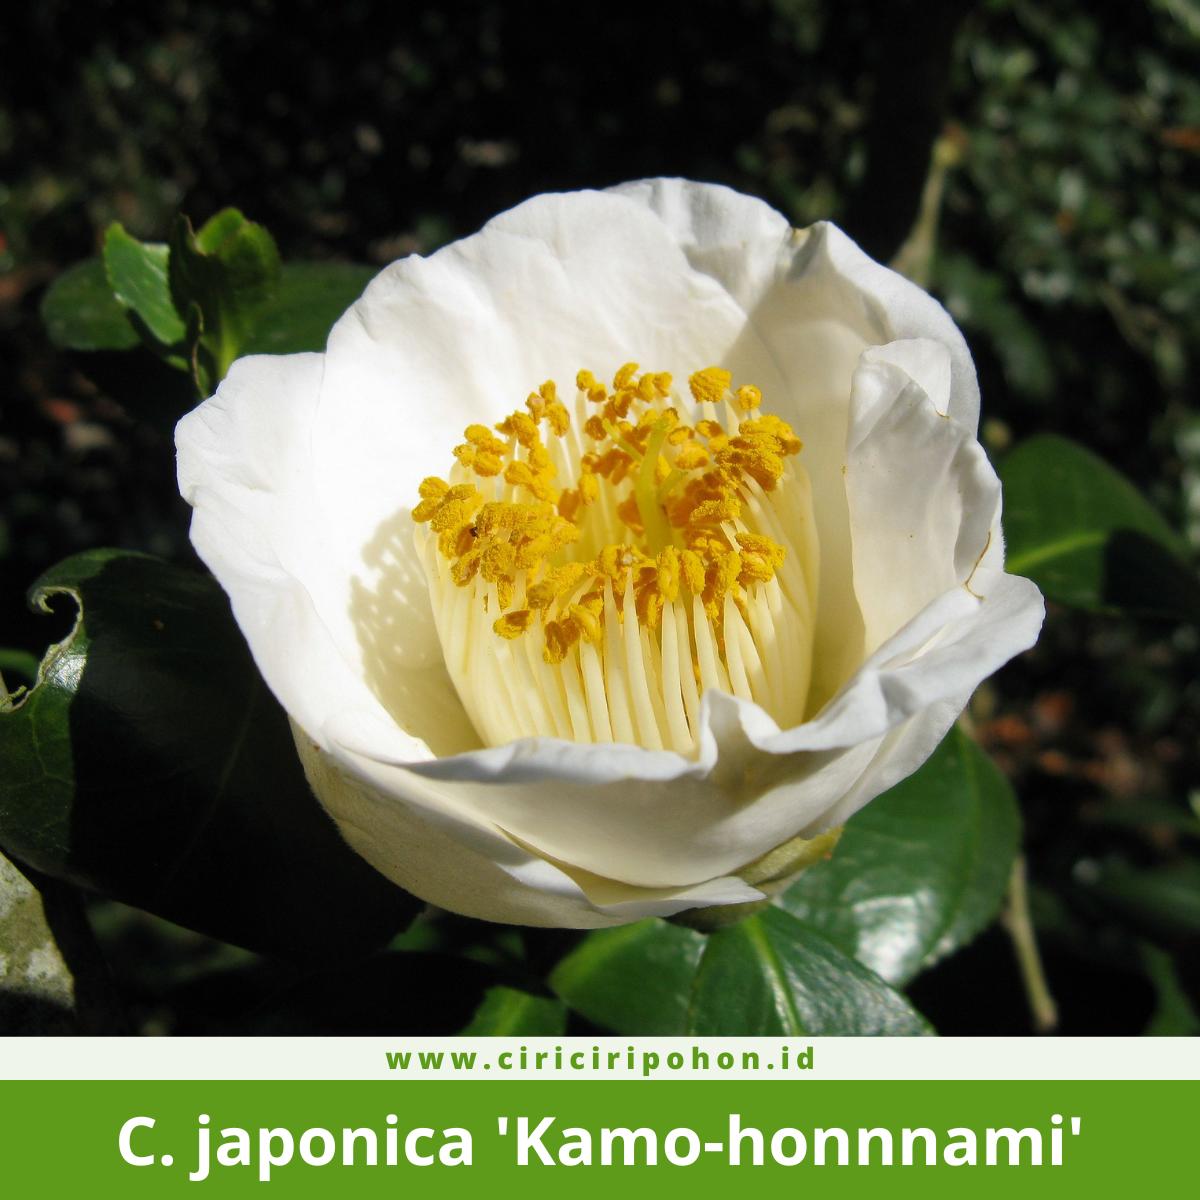 Camellia japonica 'Kamo-honnnami'